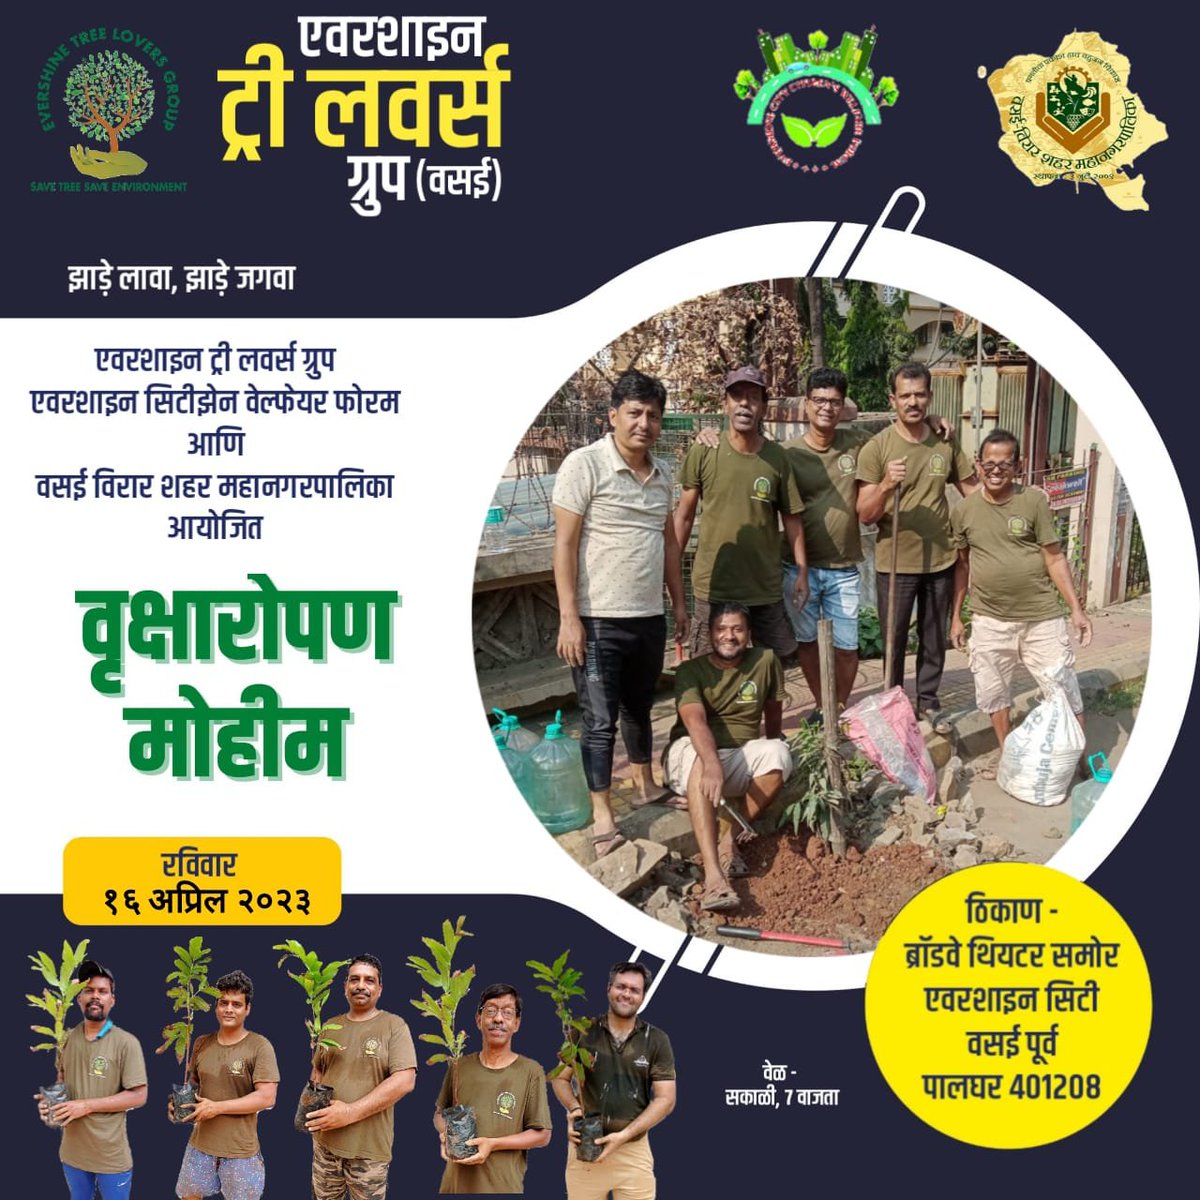 Tree Plantation Drive
Date- 16.04.2023
Location- Vasai East
Do Join us and save Environment @ErikSolheim @supriyasahuias @ParveenKaswan @SudhaRamenIFS @SmitaPatil_IFS @RakeshTiwariIFS @manassingh_ifs @GauravS_IFS @rajkumar_ifs @gauravg85 @CentralIfs @swethaboddu 

 #WorldArtDay